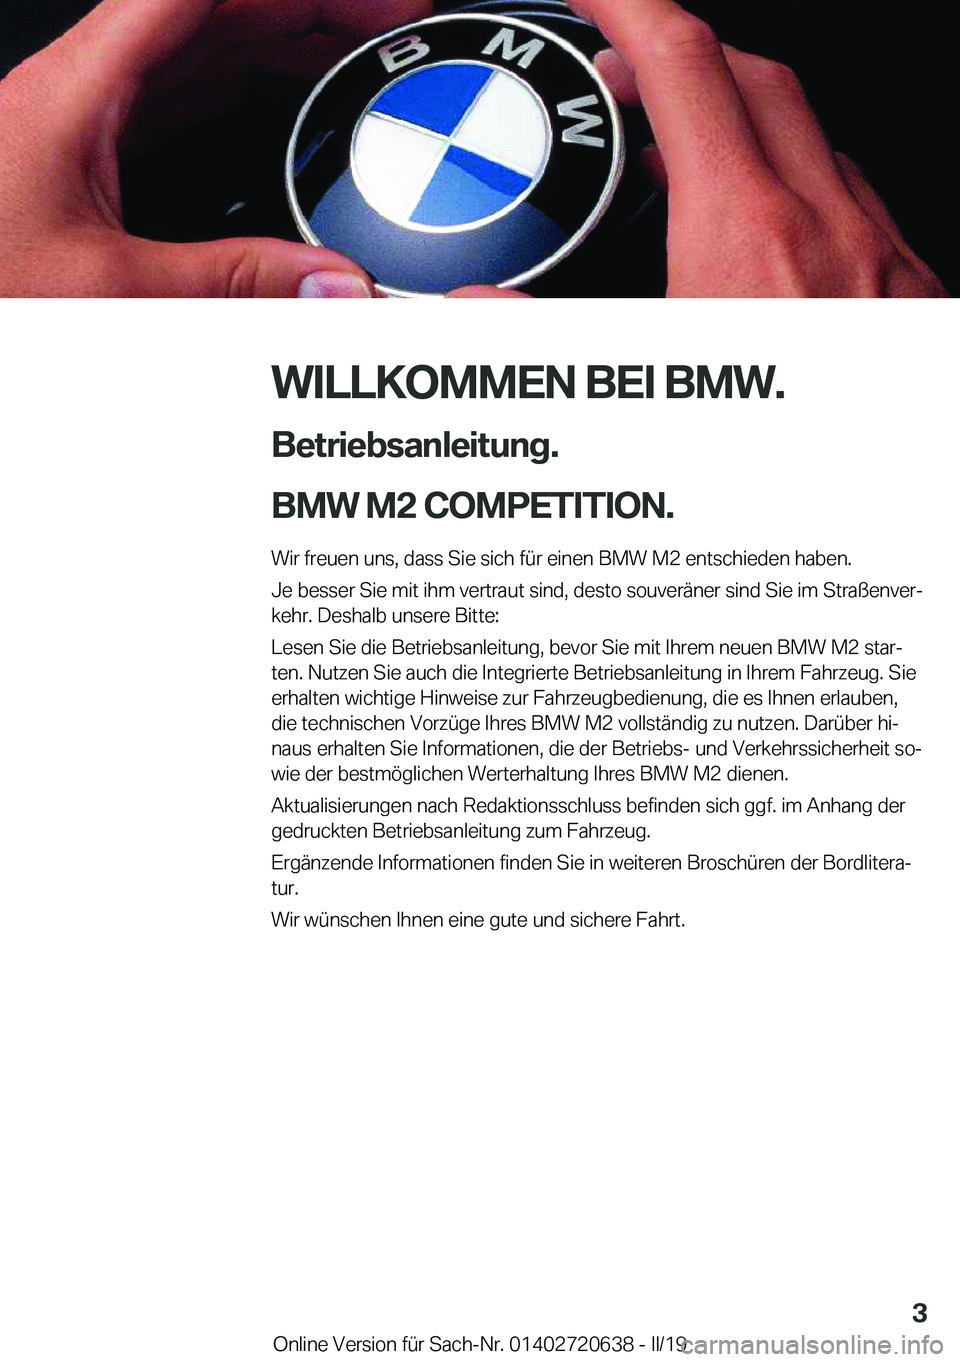 BMW M2 2020  Betriebsanleitungen (in German) �W�I�L�L�K�O�M�M�E�N��B�E�I��B�M�W�.�B�e�t�r�i�e�b�s�a�n�l�e�i�t�u�n�g�.
�B�M�W��M�2��C�O�M�P�E�T�I�T�I�O�N�.� �W�i�r��f�r�e�u�e�n��u�n�s�,��d�a�s�s��S�i�e��s�i�c�h��f�